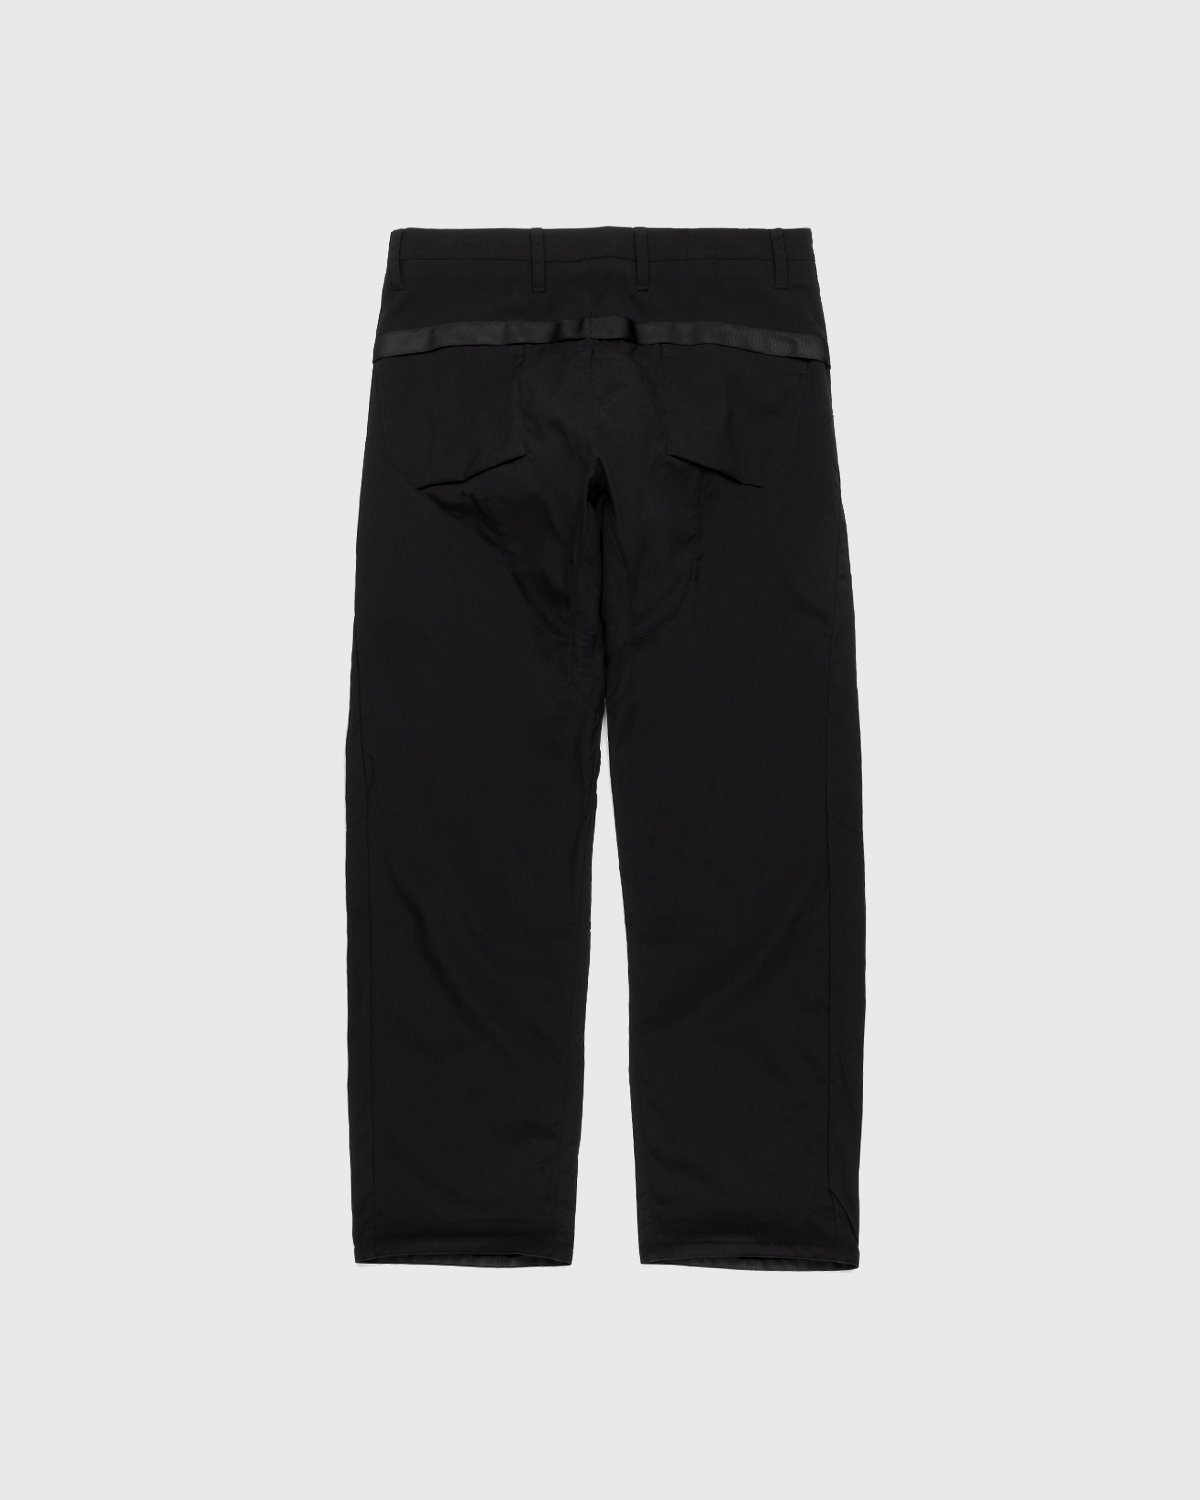 ACRONYM - P39-M Pants Black - Clothing - Black - Image 2